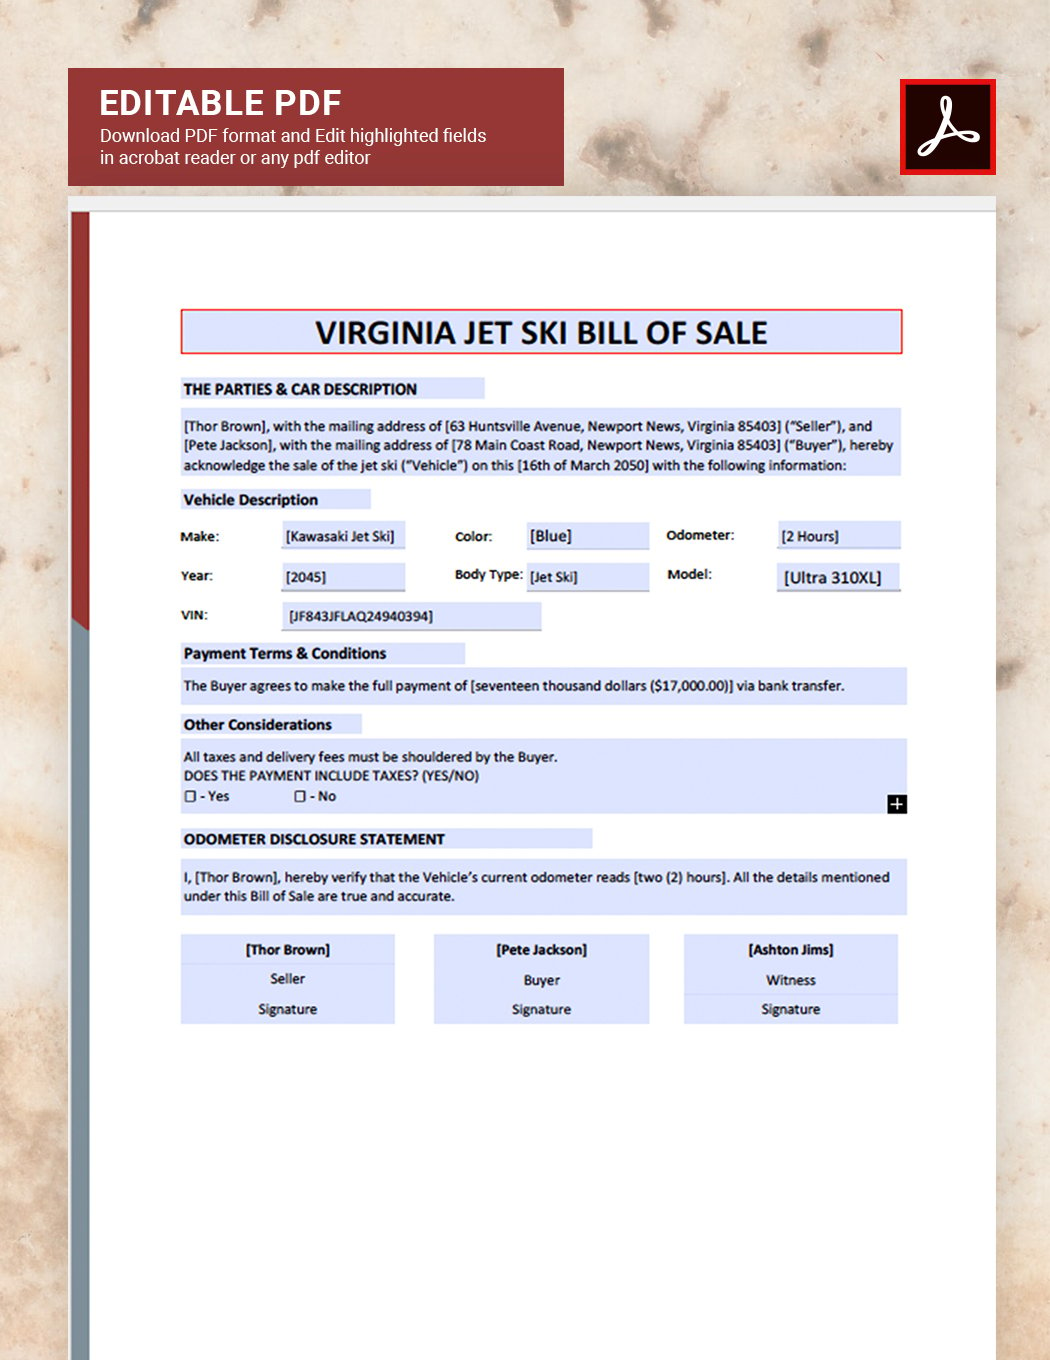 Virginia Jet Ski Bill of Sale Template